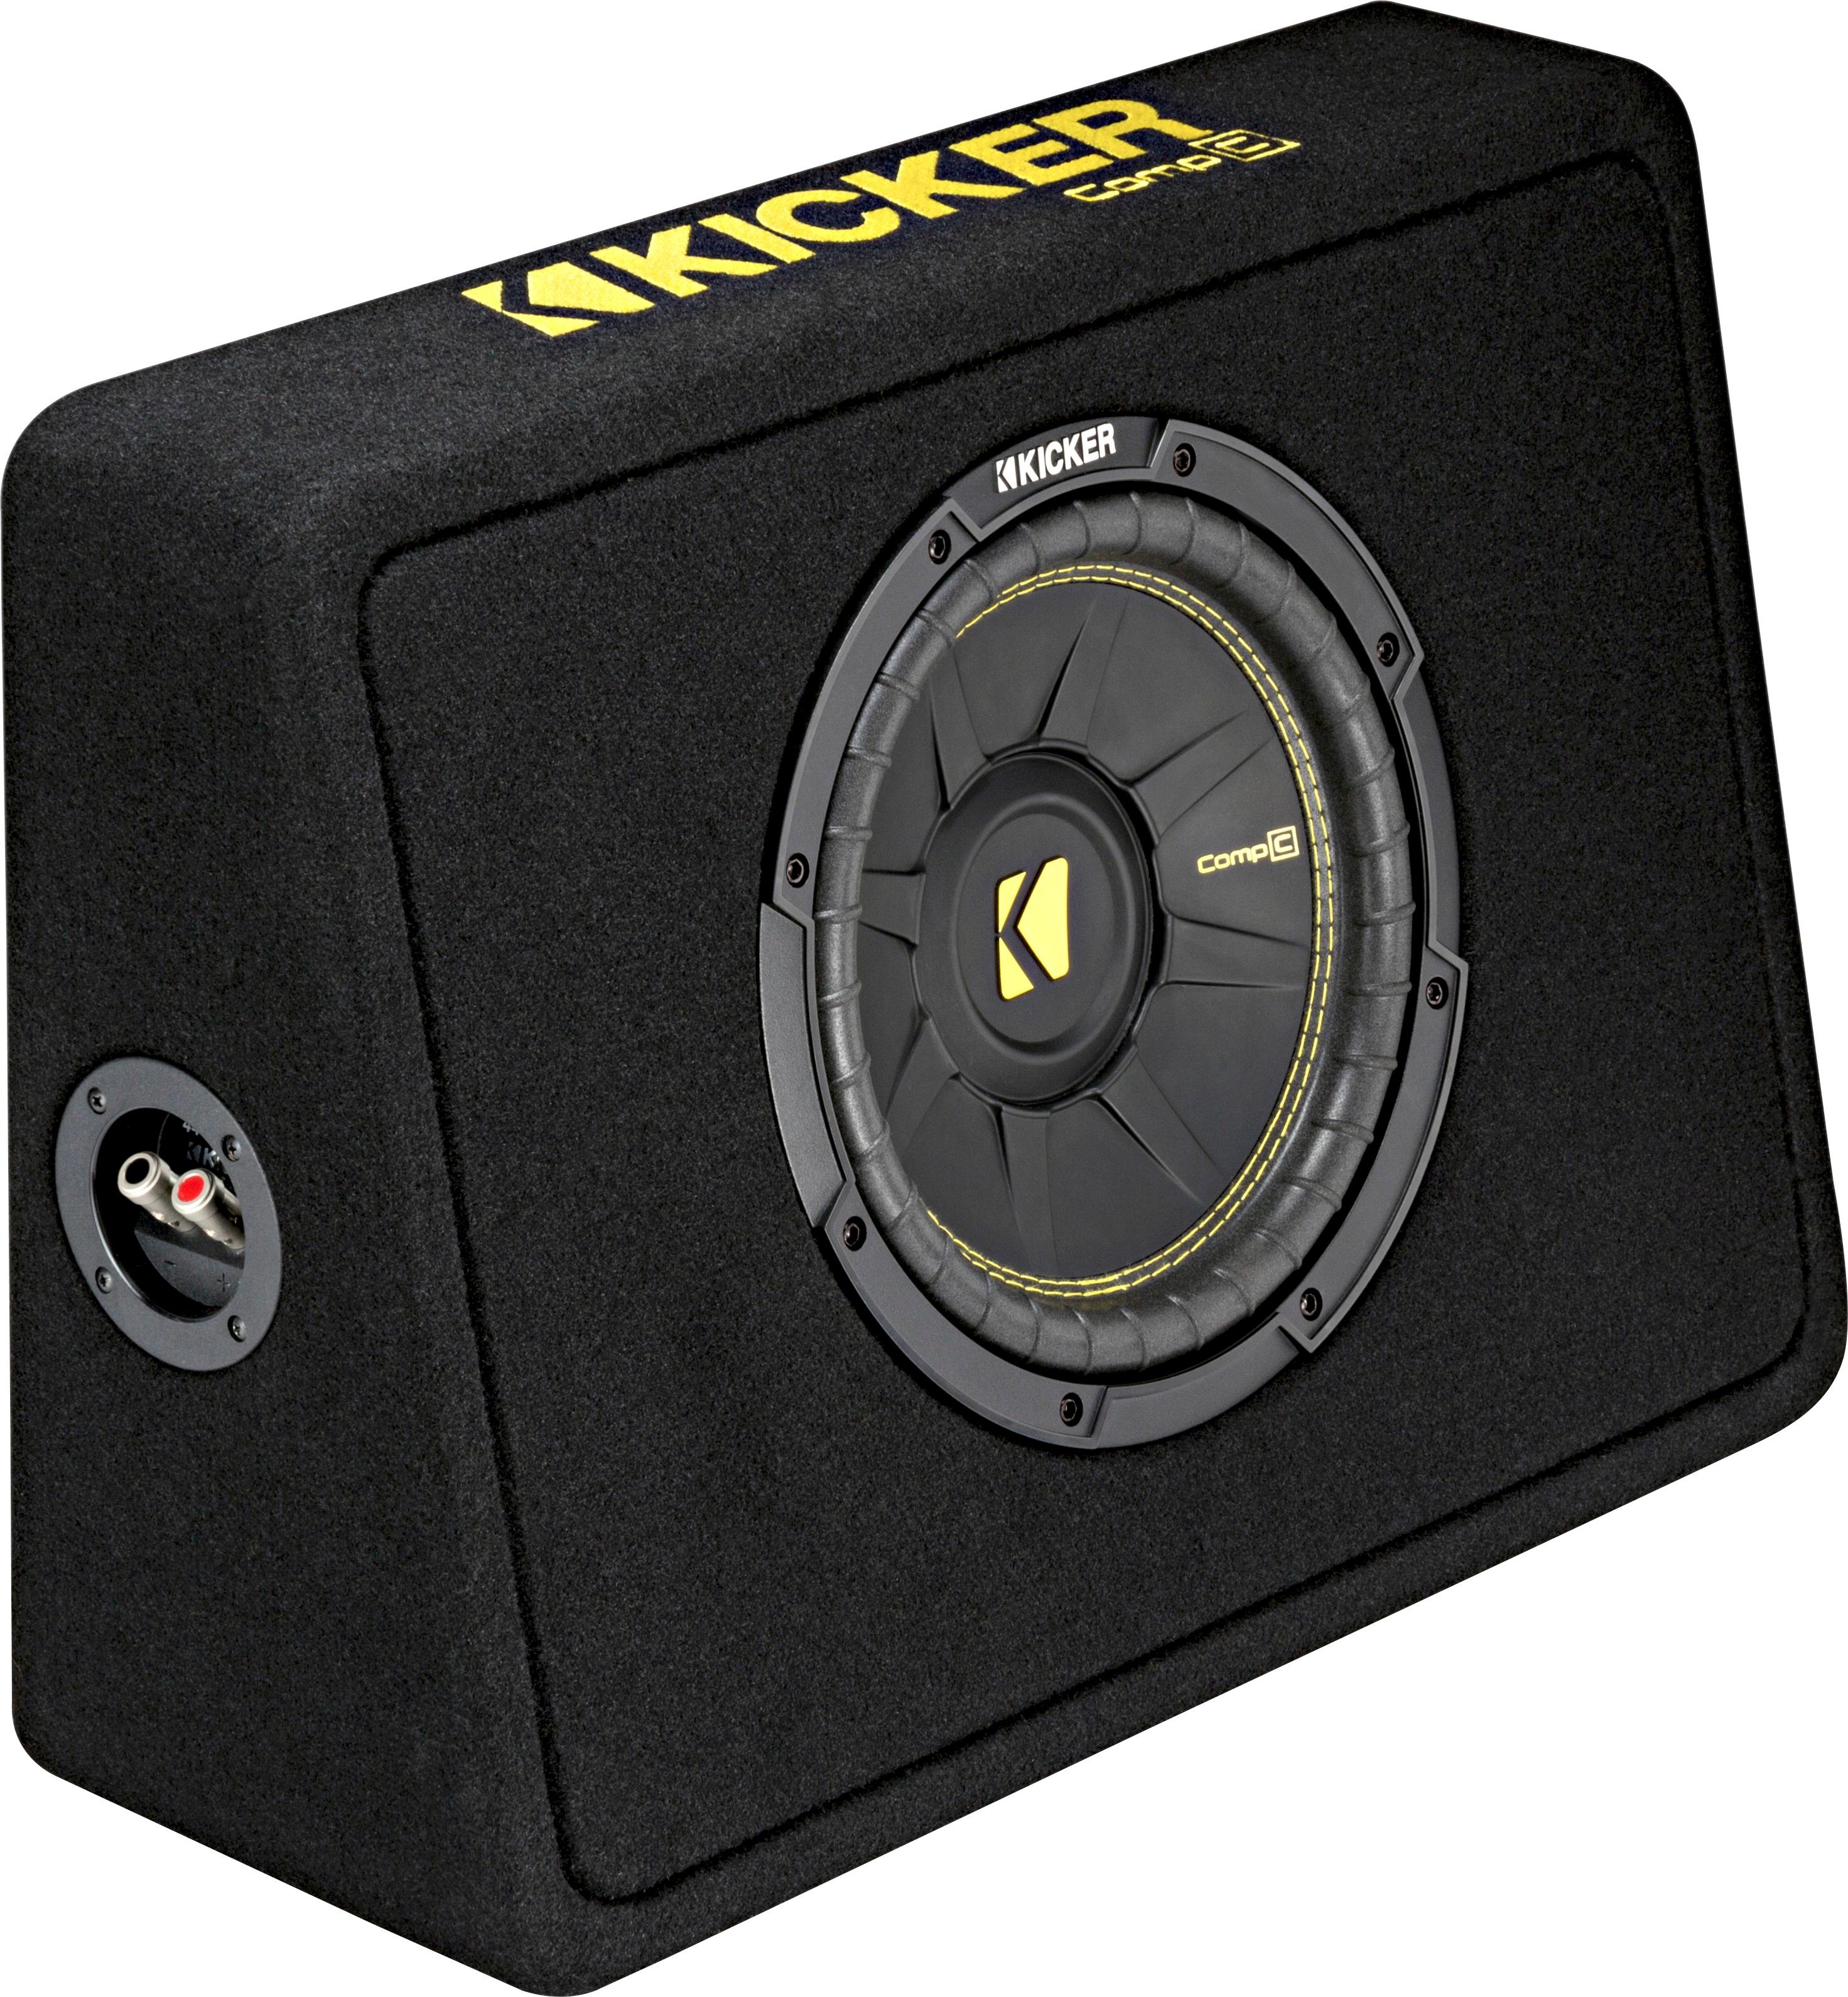 Angle View: KICKER - KS Series 6" x 8" 2-Way Car Speaker with Polypropylene Cones (Each) - Black